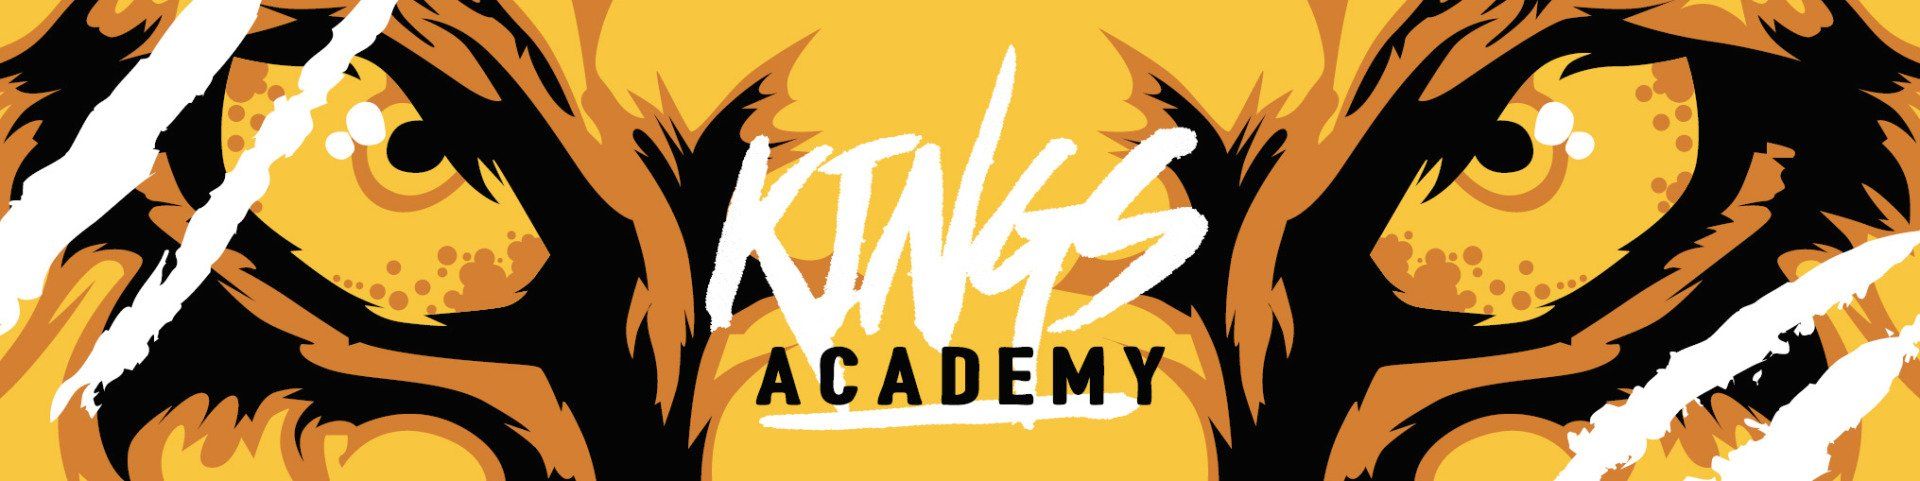 kings academy logo